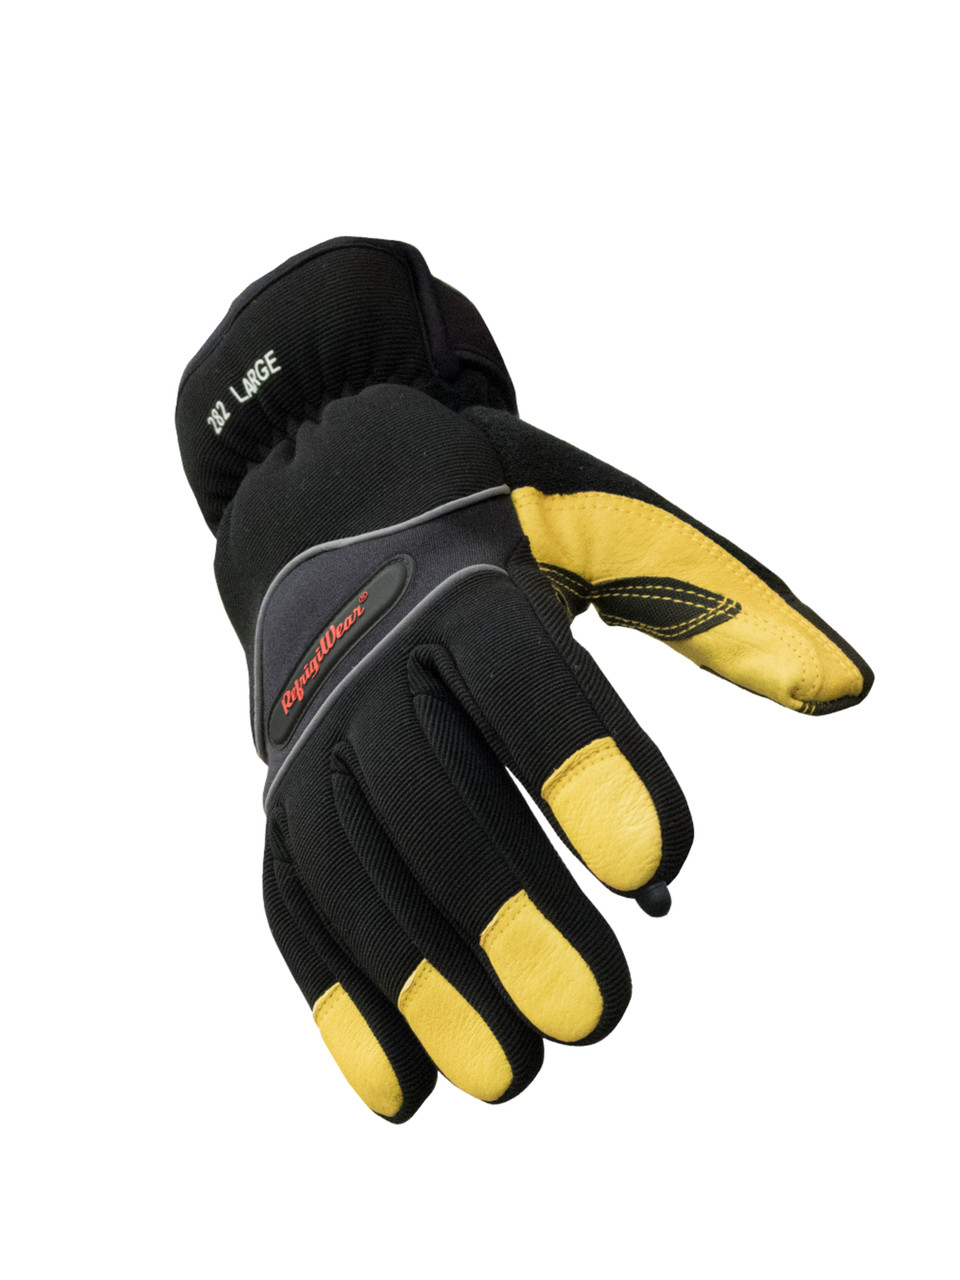 Insulated Waterproof Work Gloves